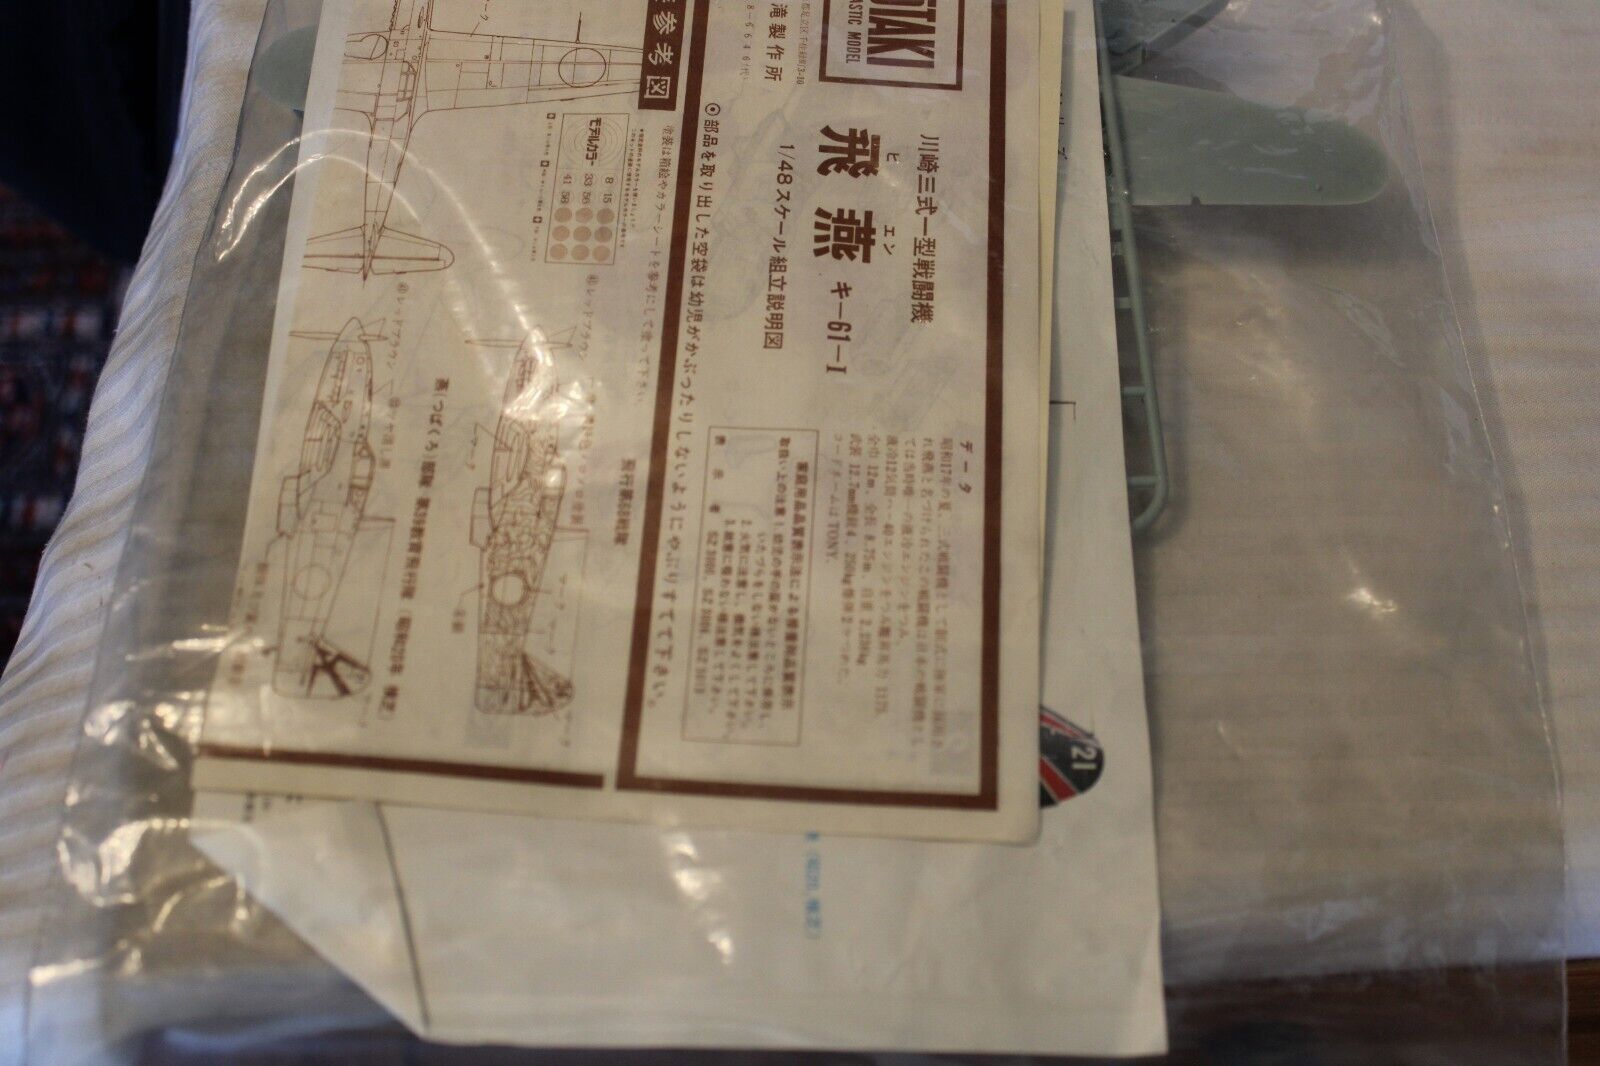 1/48 Scale Otaki, Zero A6m5 Zeke Fighter Model Kit BN NO Box - $40.00